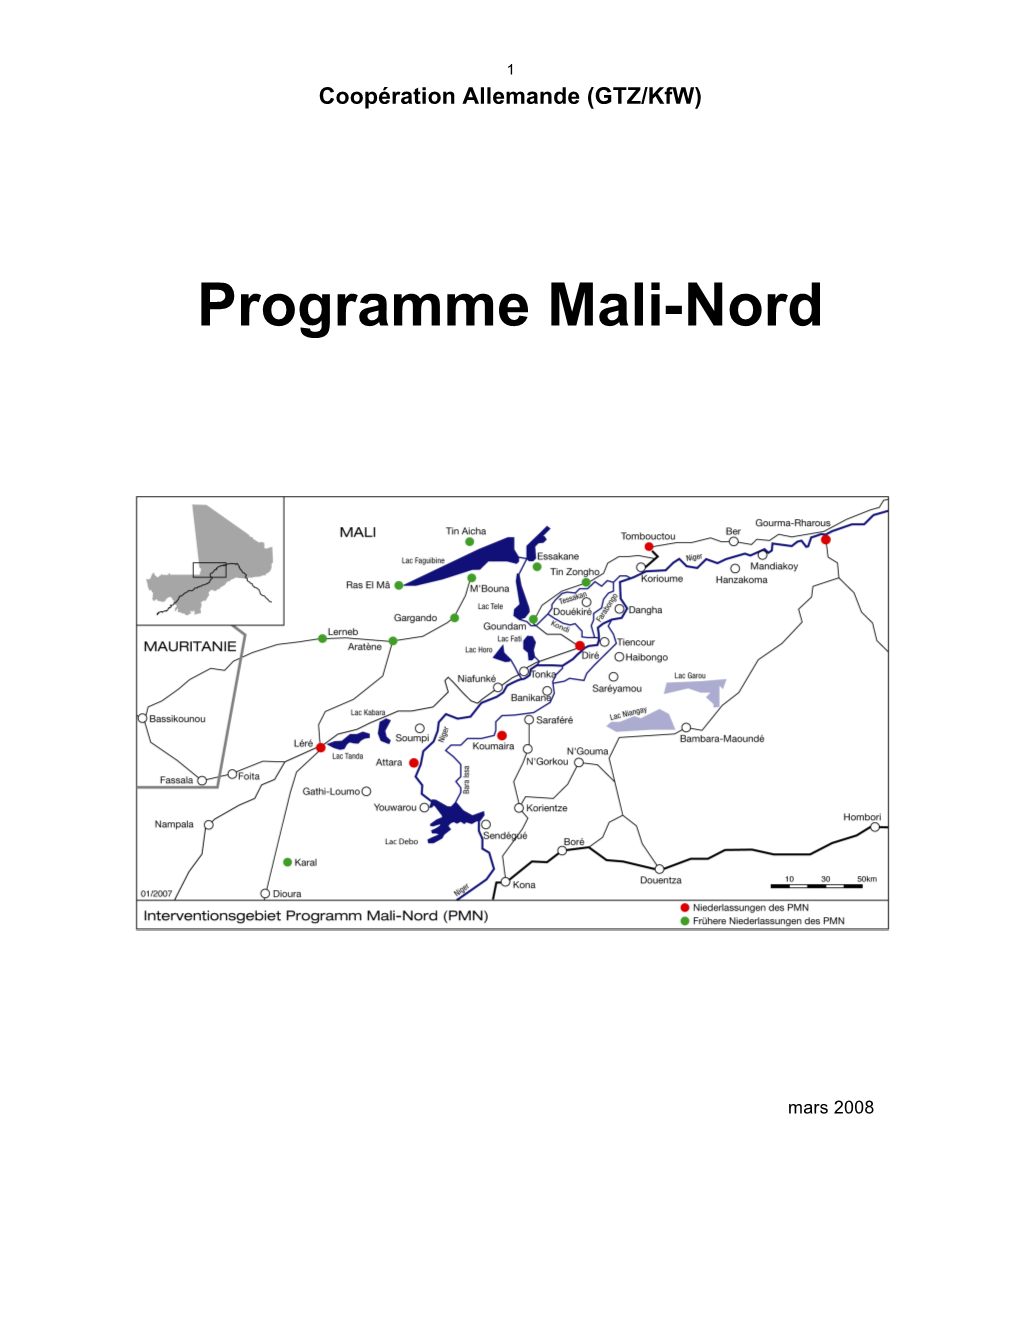 Programme Mali-Nord